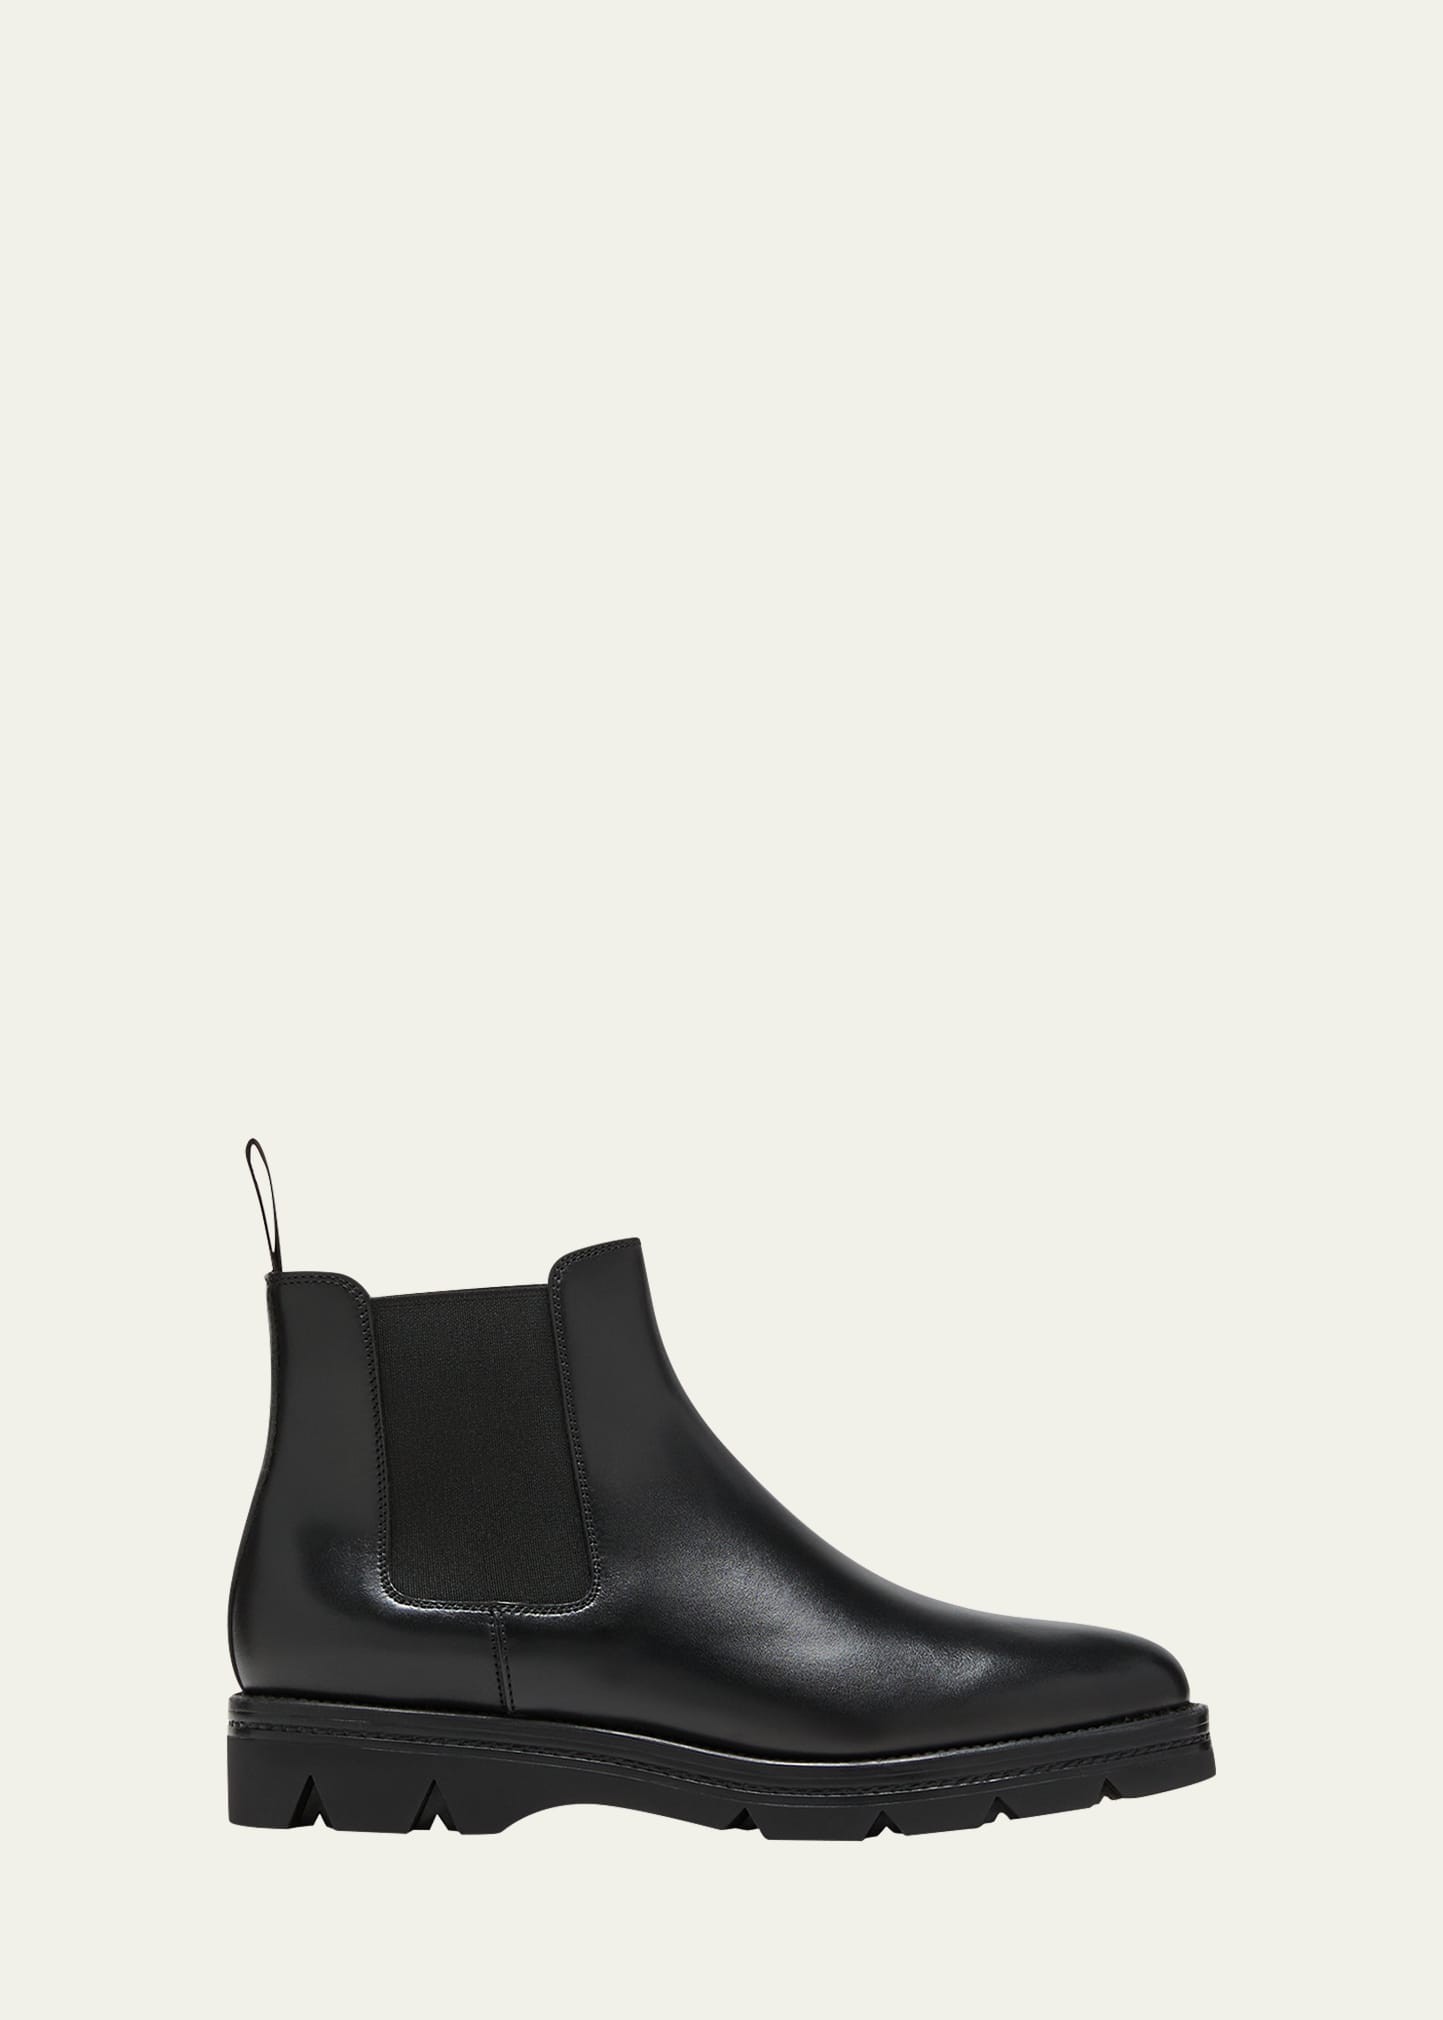 Santoni Black Fern Chelsea Boots